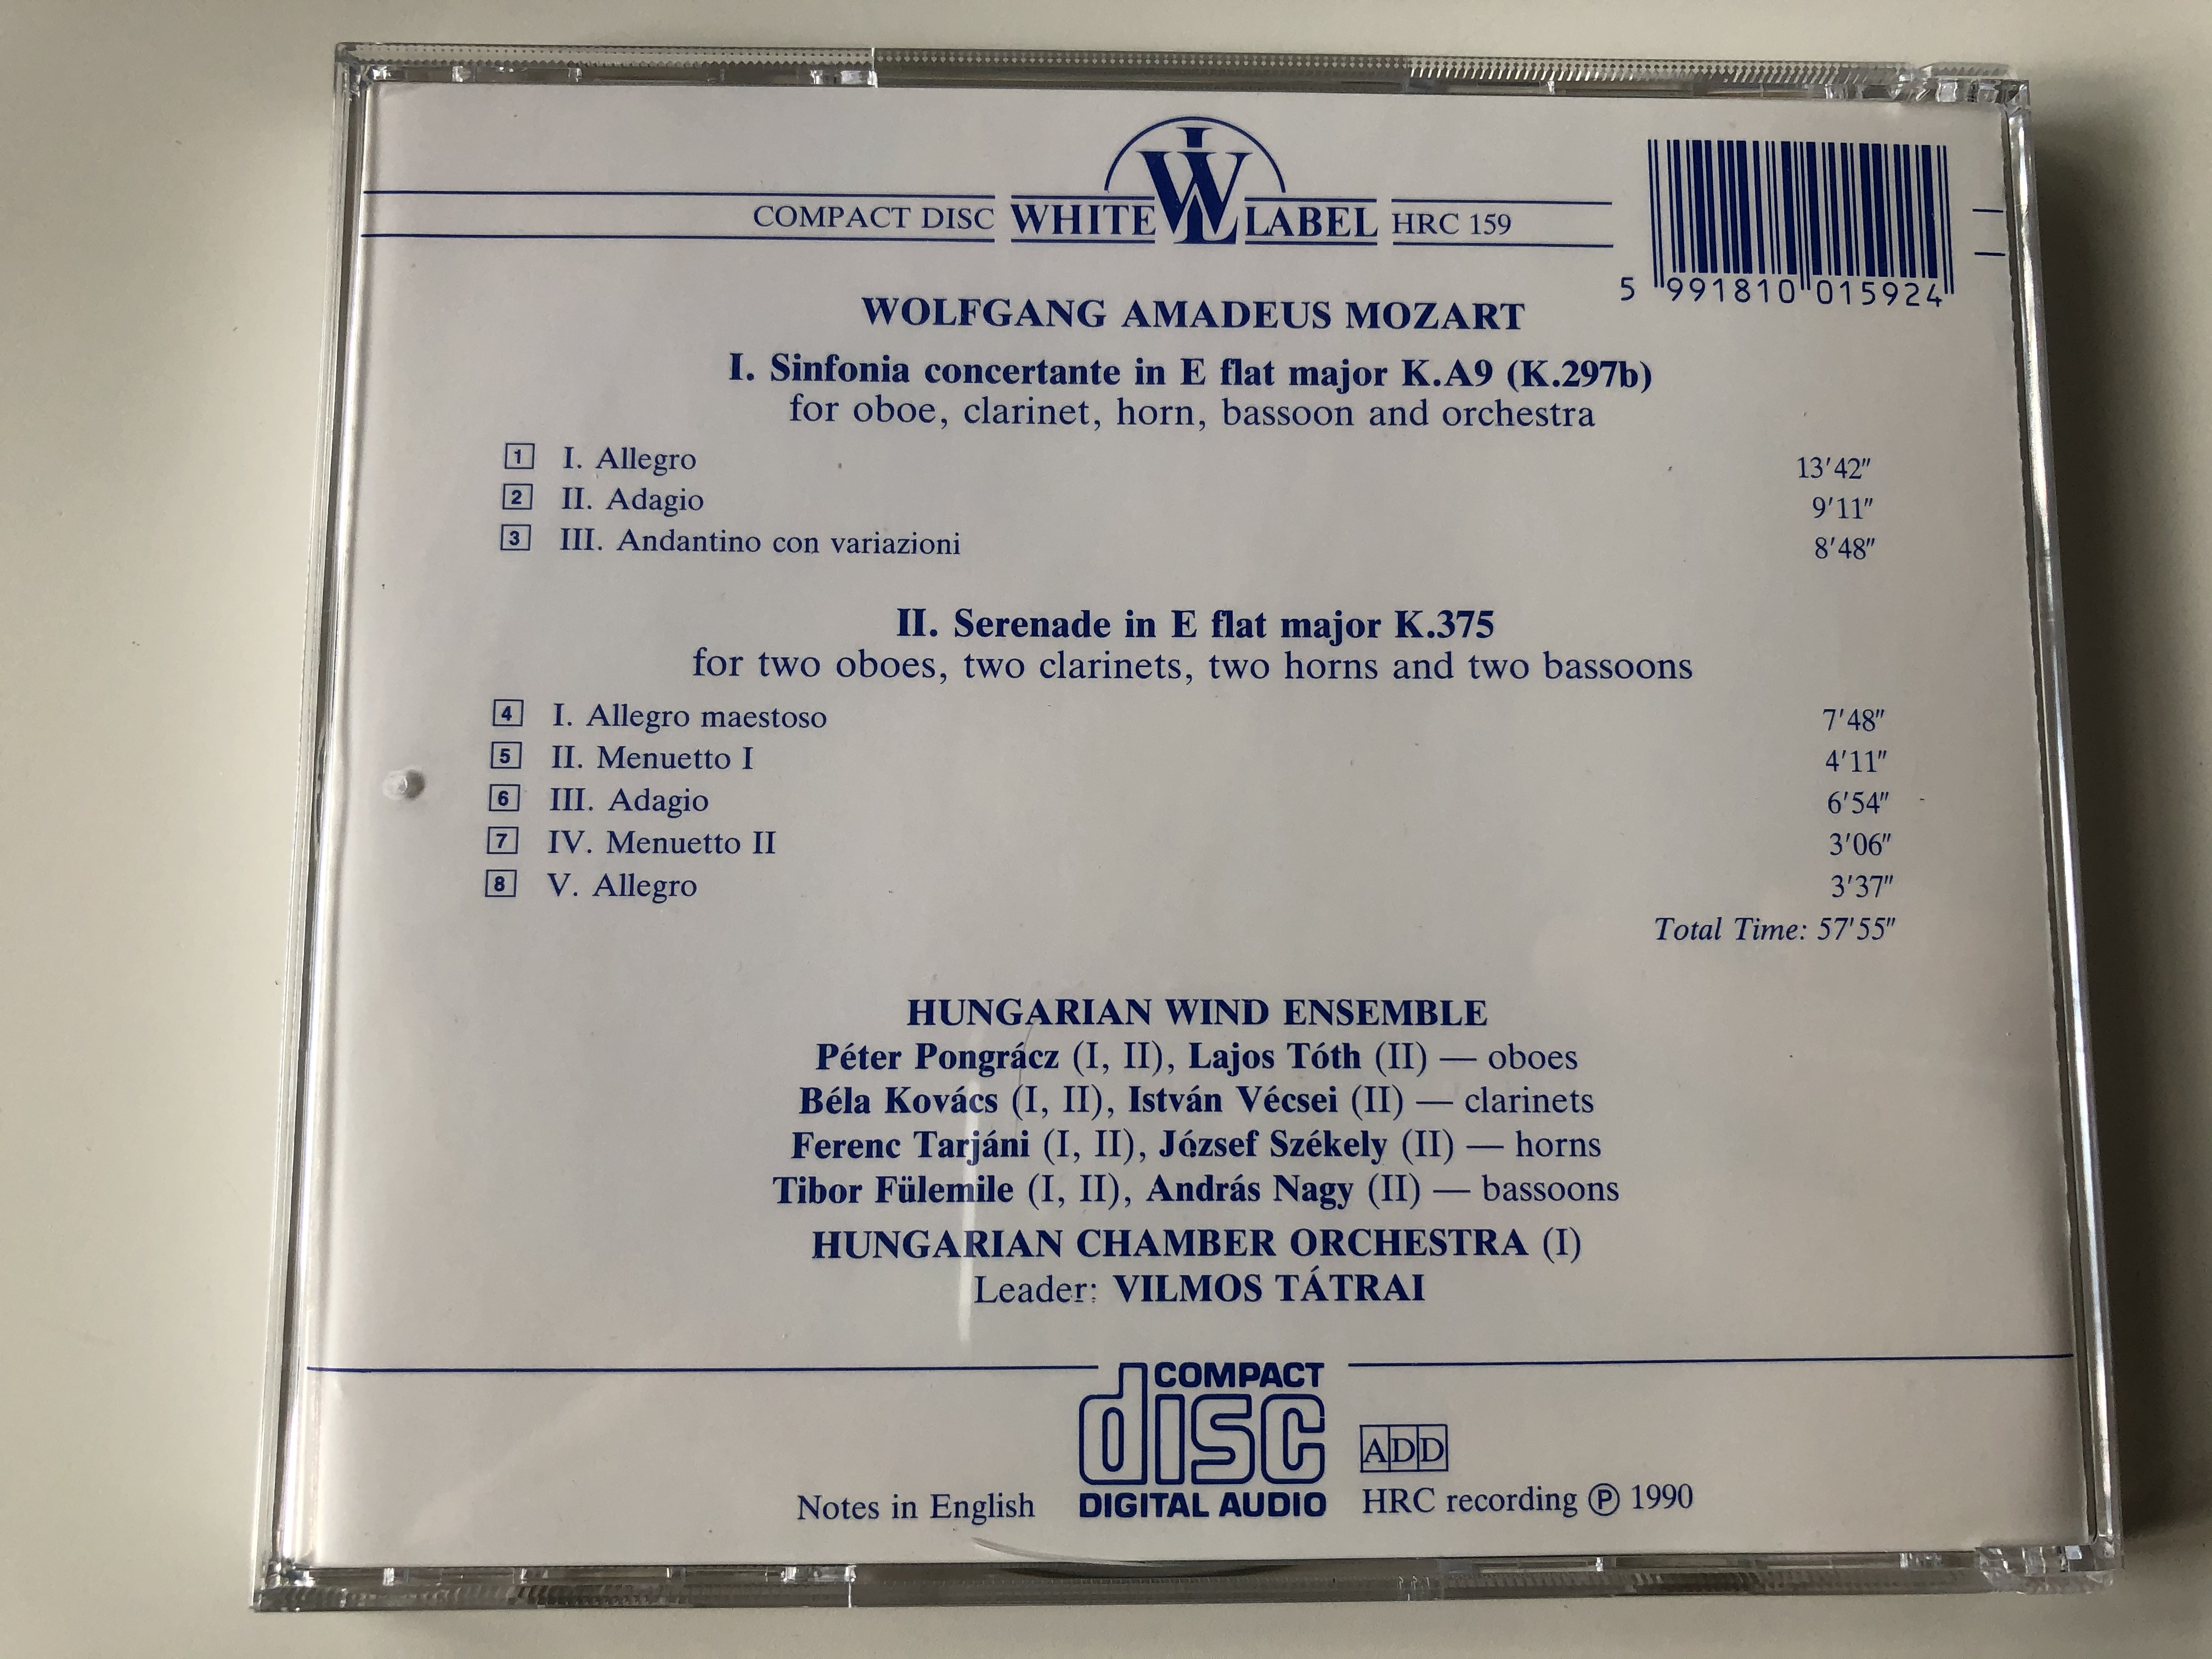 mozart-sinfonia-concertante-k.-a9-serenade-k.375-hungarian-wind-ensemble-hungaroton-audio-cd-1990-stereo-hrc-159-4-.jpg